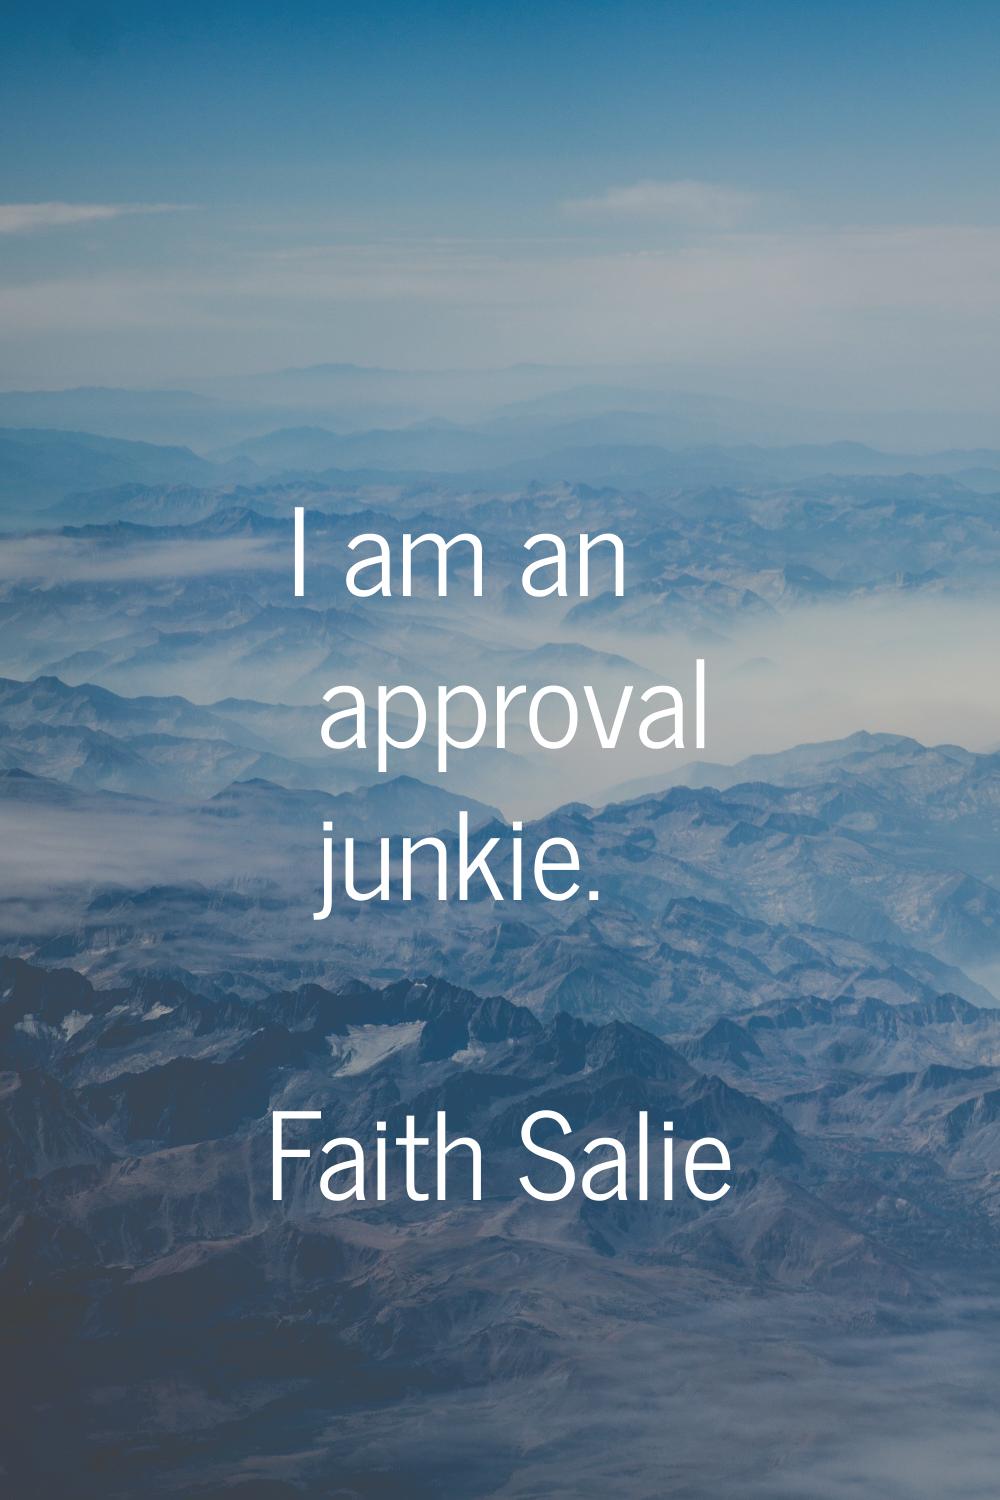 I am an approval junkie.